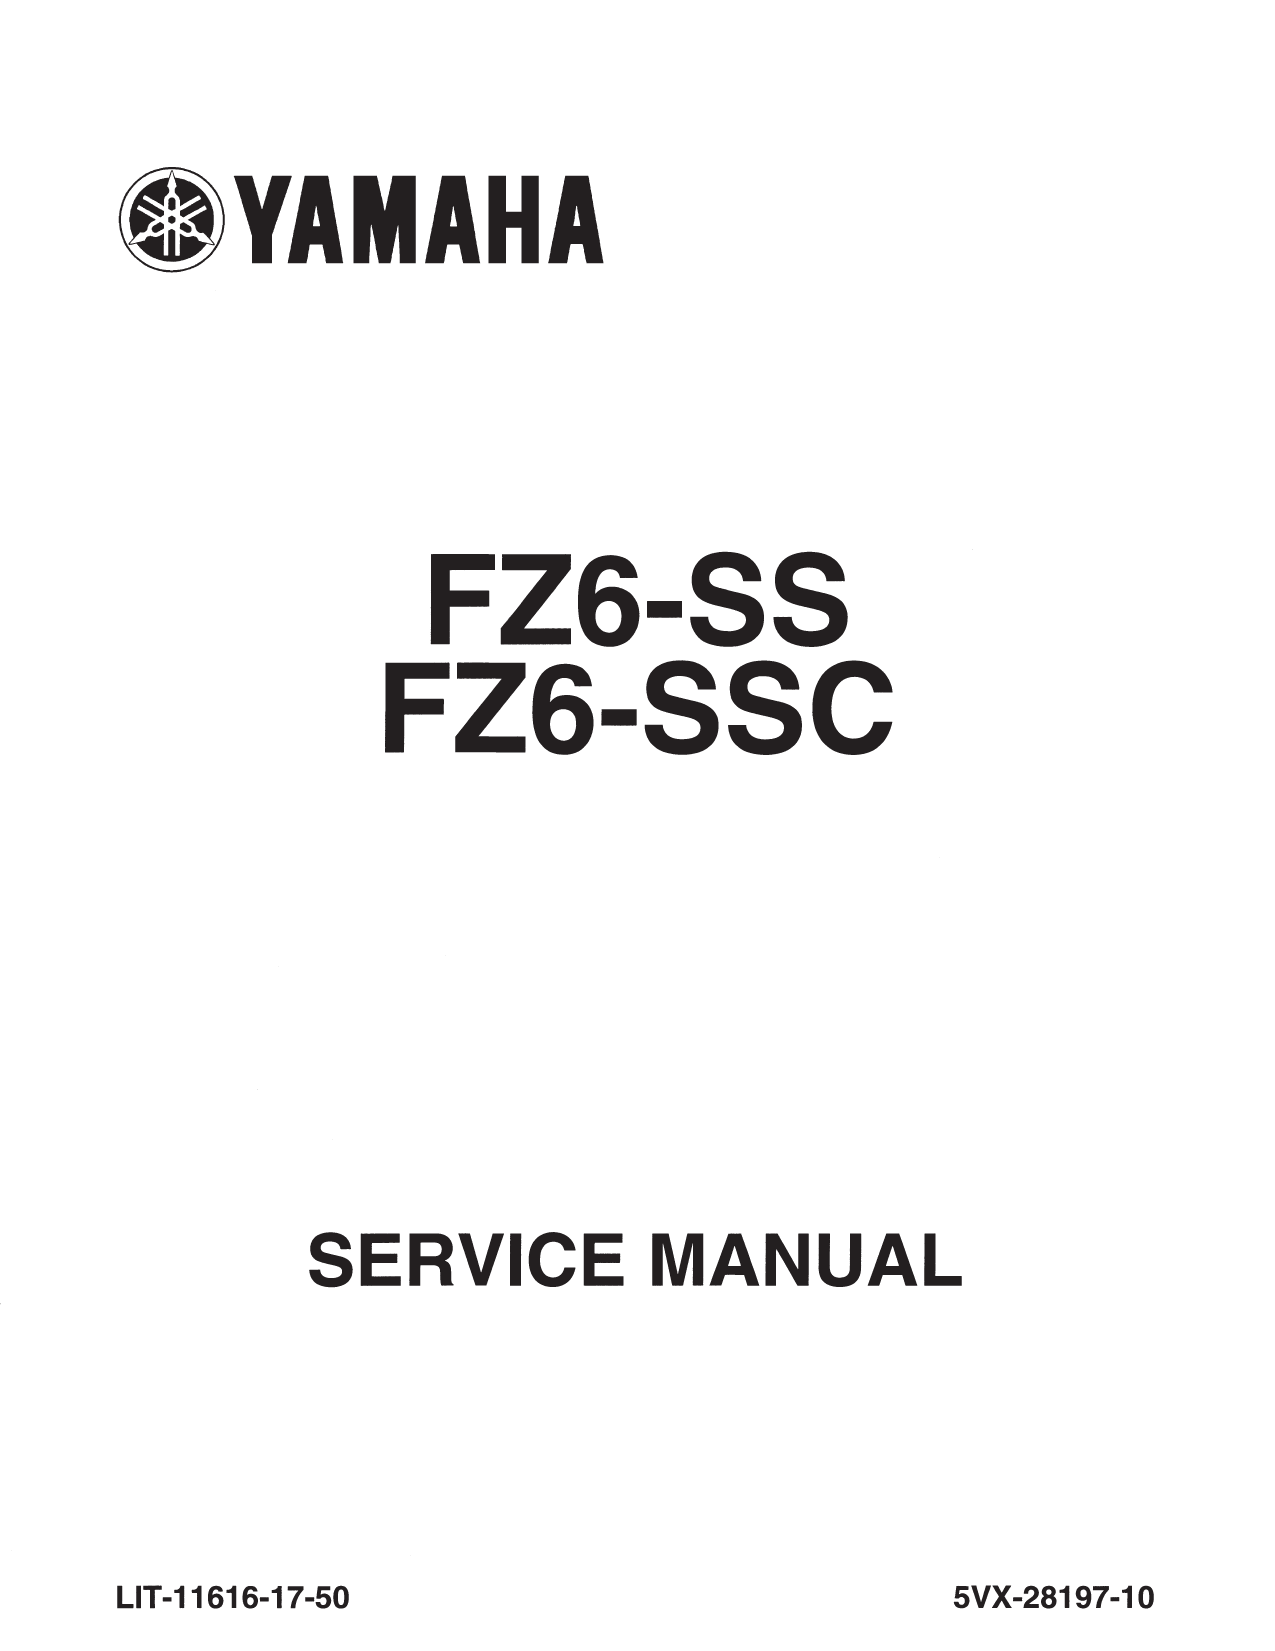 2004-2009 Yamaha FZ6-SS, FZ6-SSC service manual Preview image 1